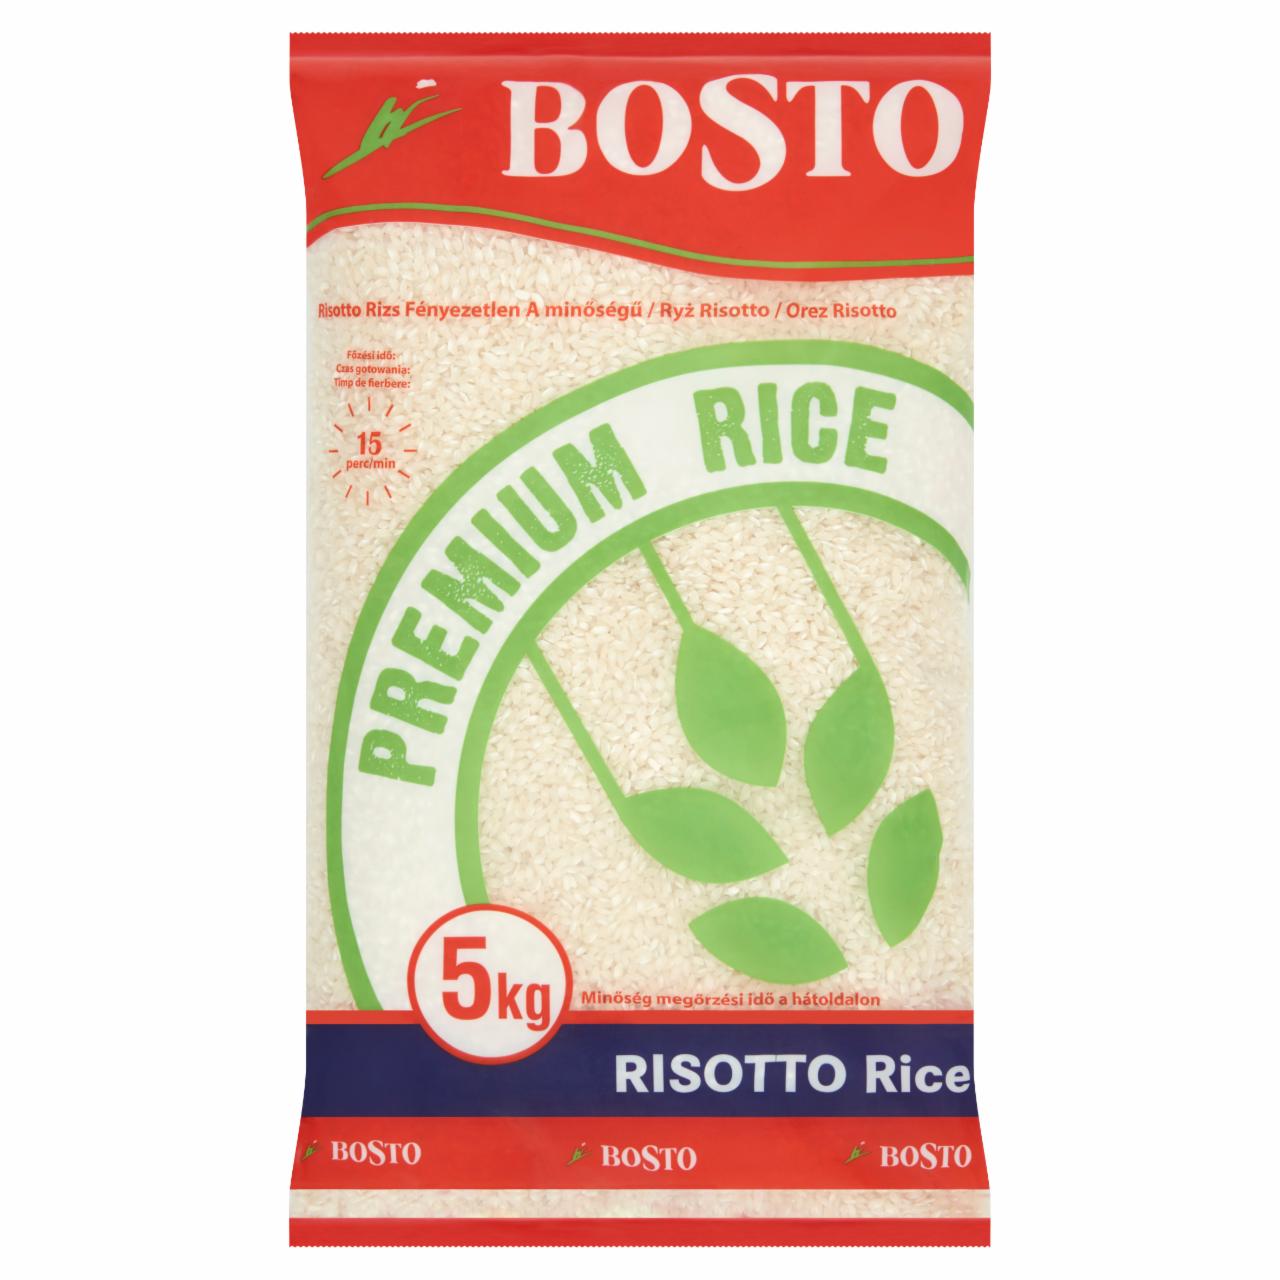 Képek - Bosto Risotto rizs 5 kg